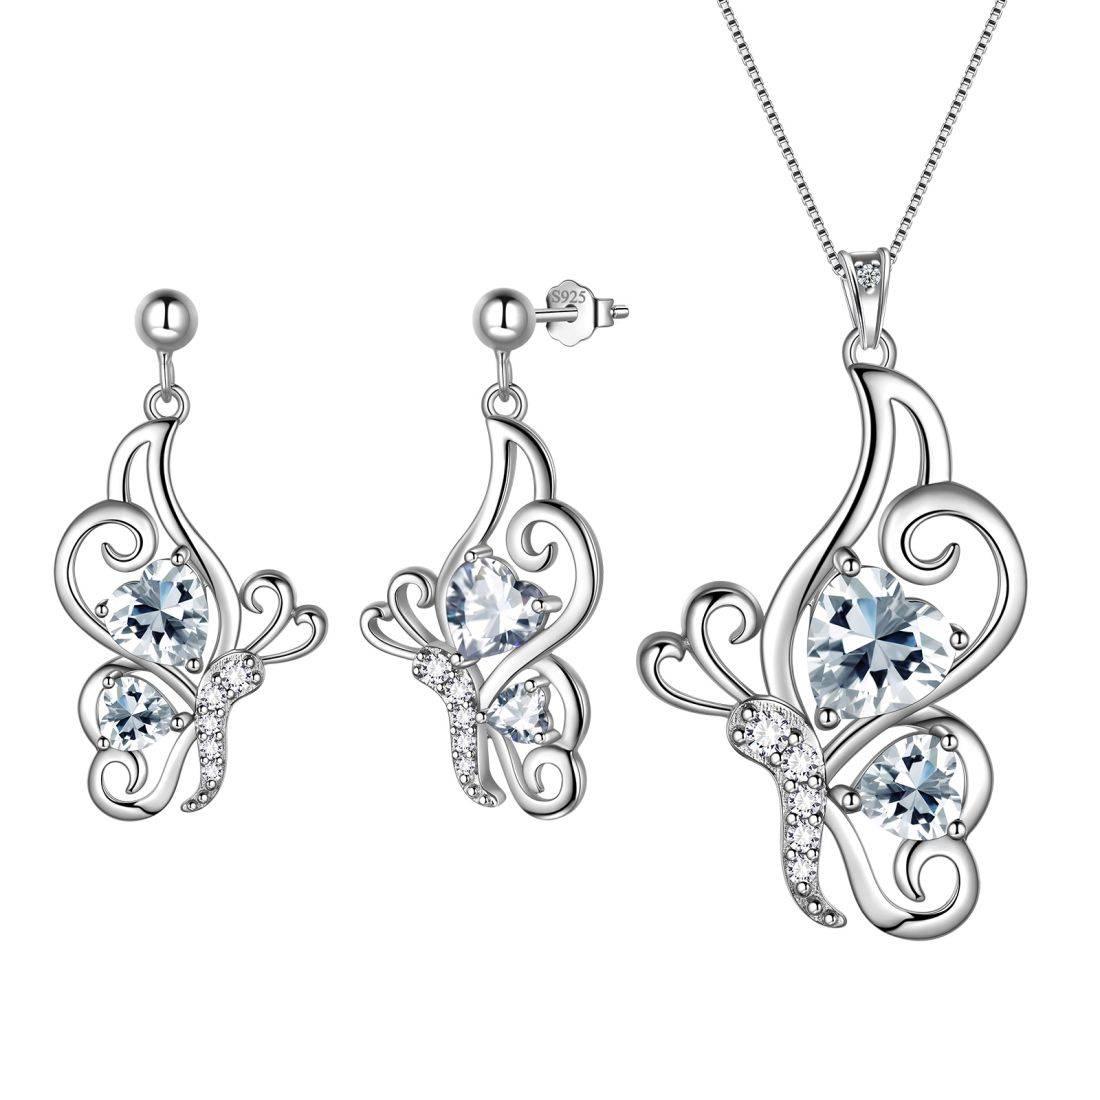 Butterfly Birthstone April Diamond Jewelry Set 3PCS - Jewelry Set - Aurora Tears